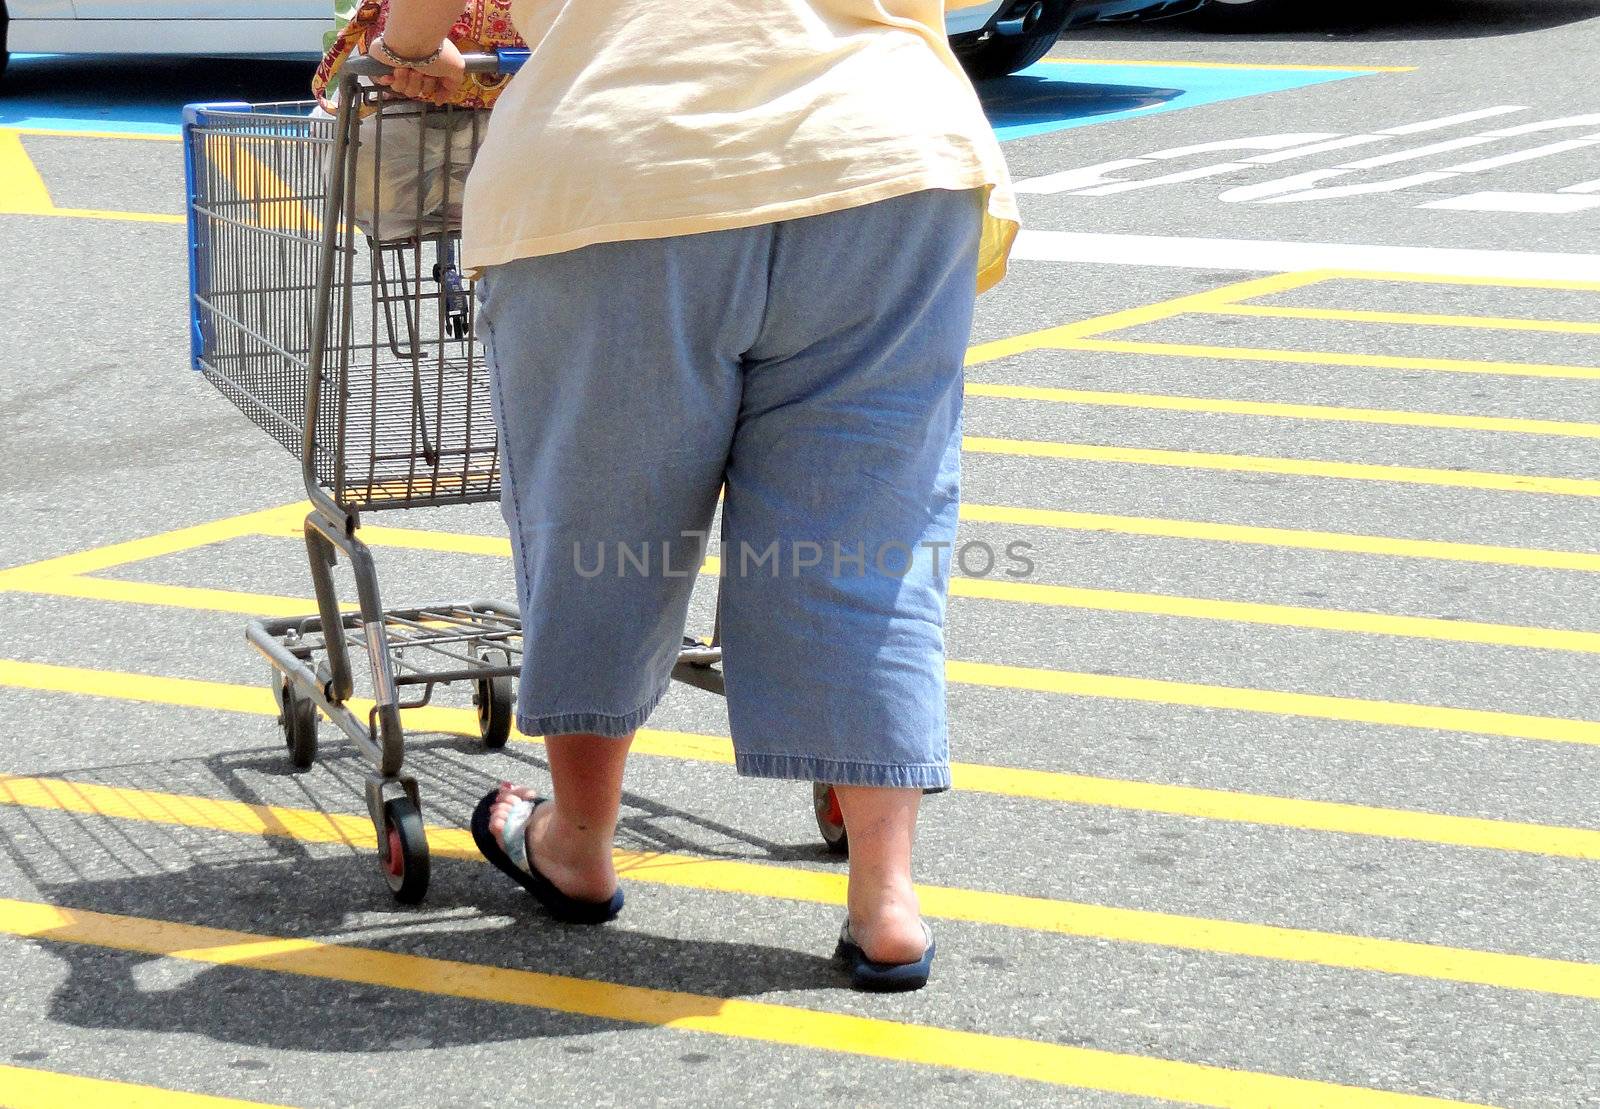 Overweight woman. by oscarcwilliams